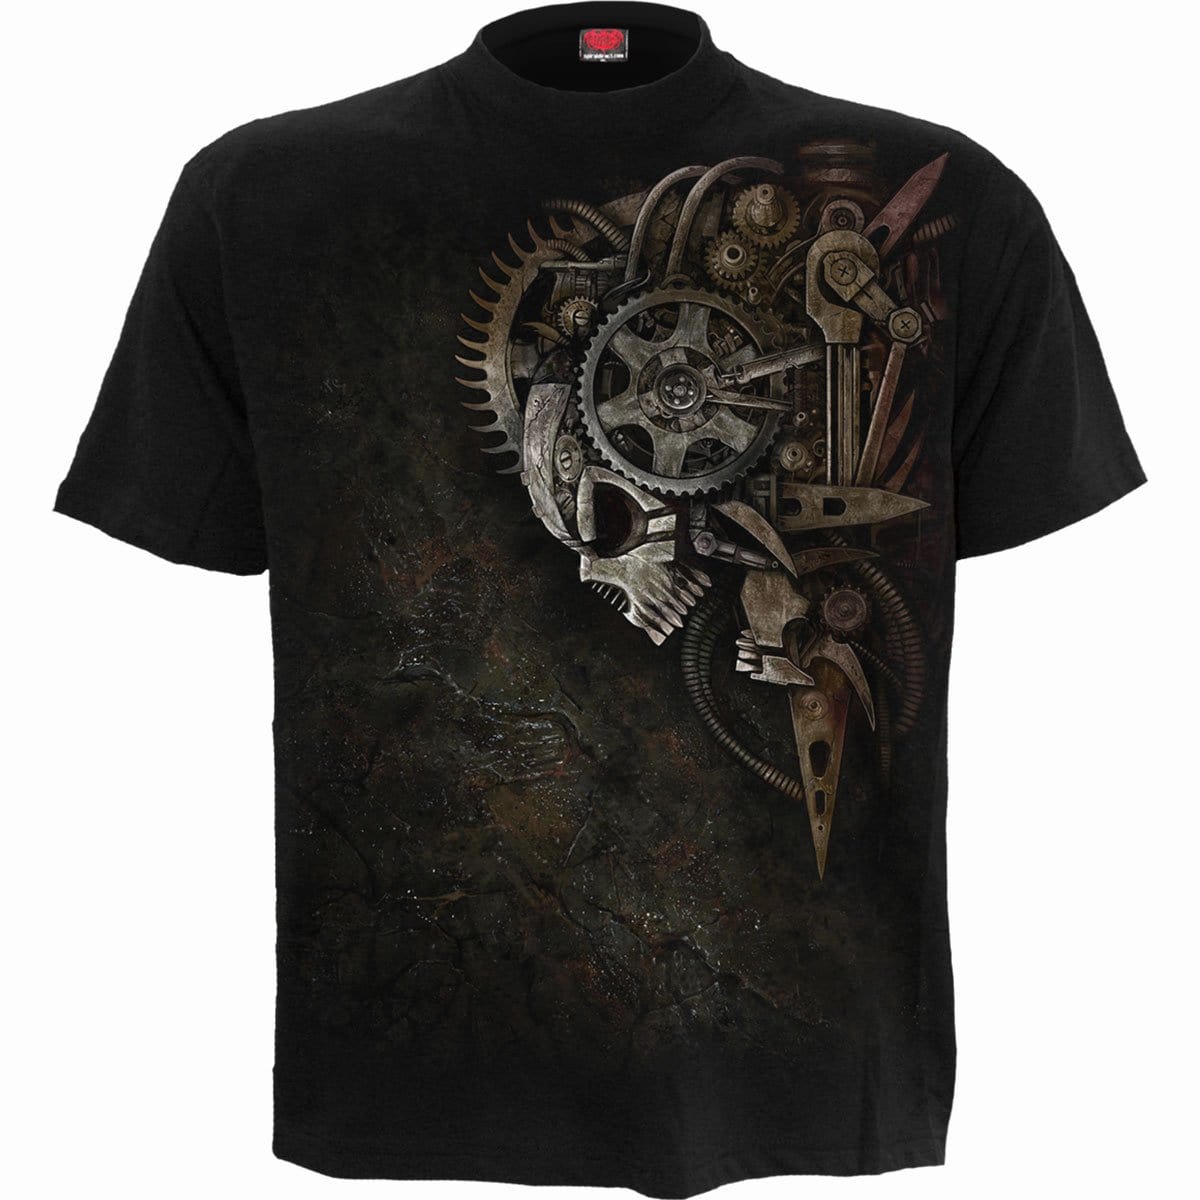 DIESEL PUNK - T-Shirt Black - Spiral USA